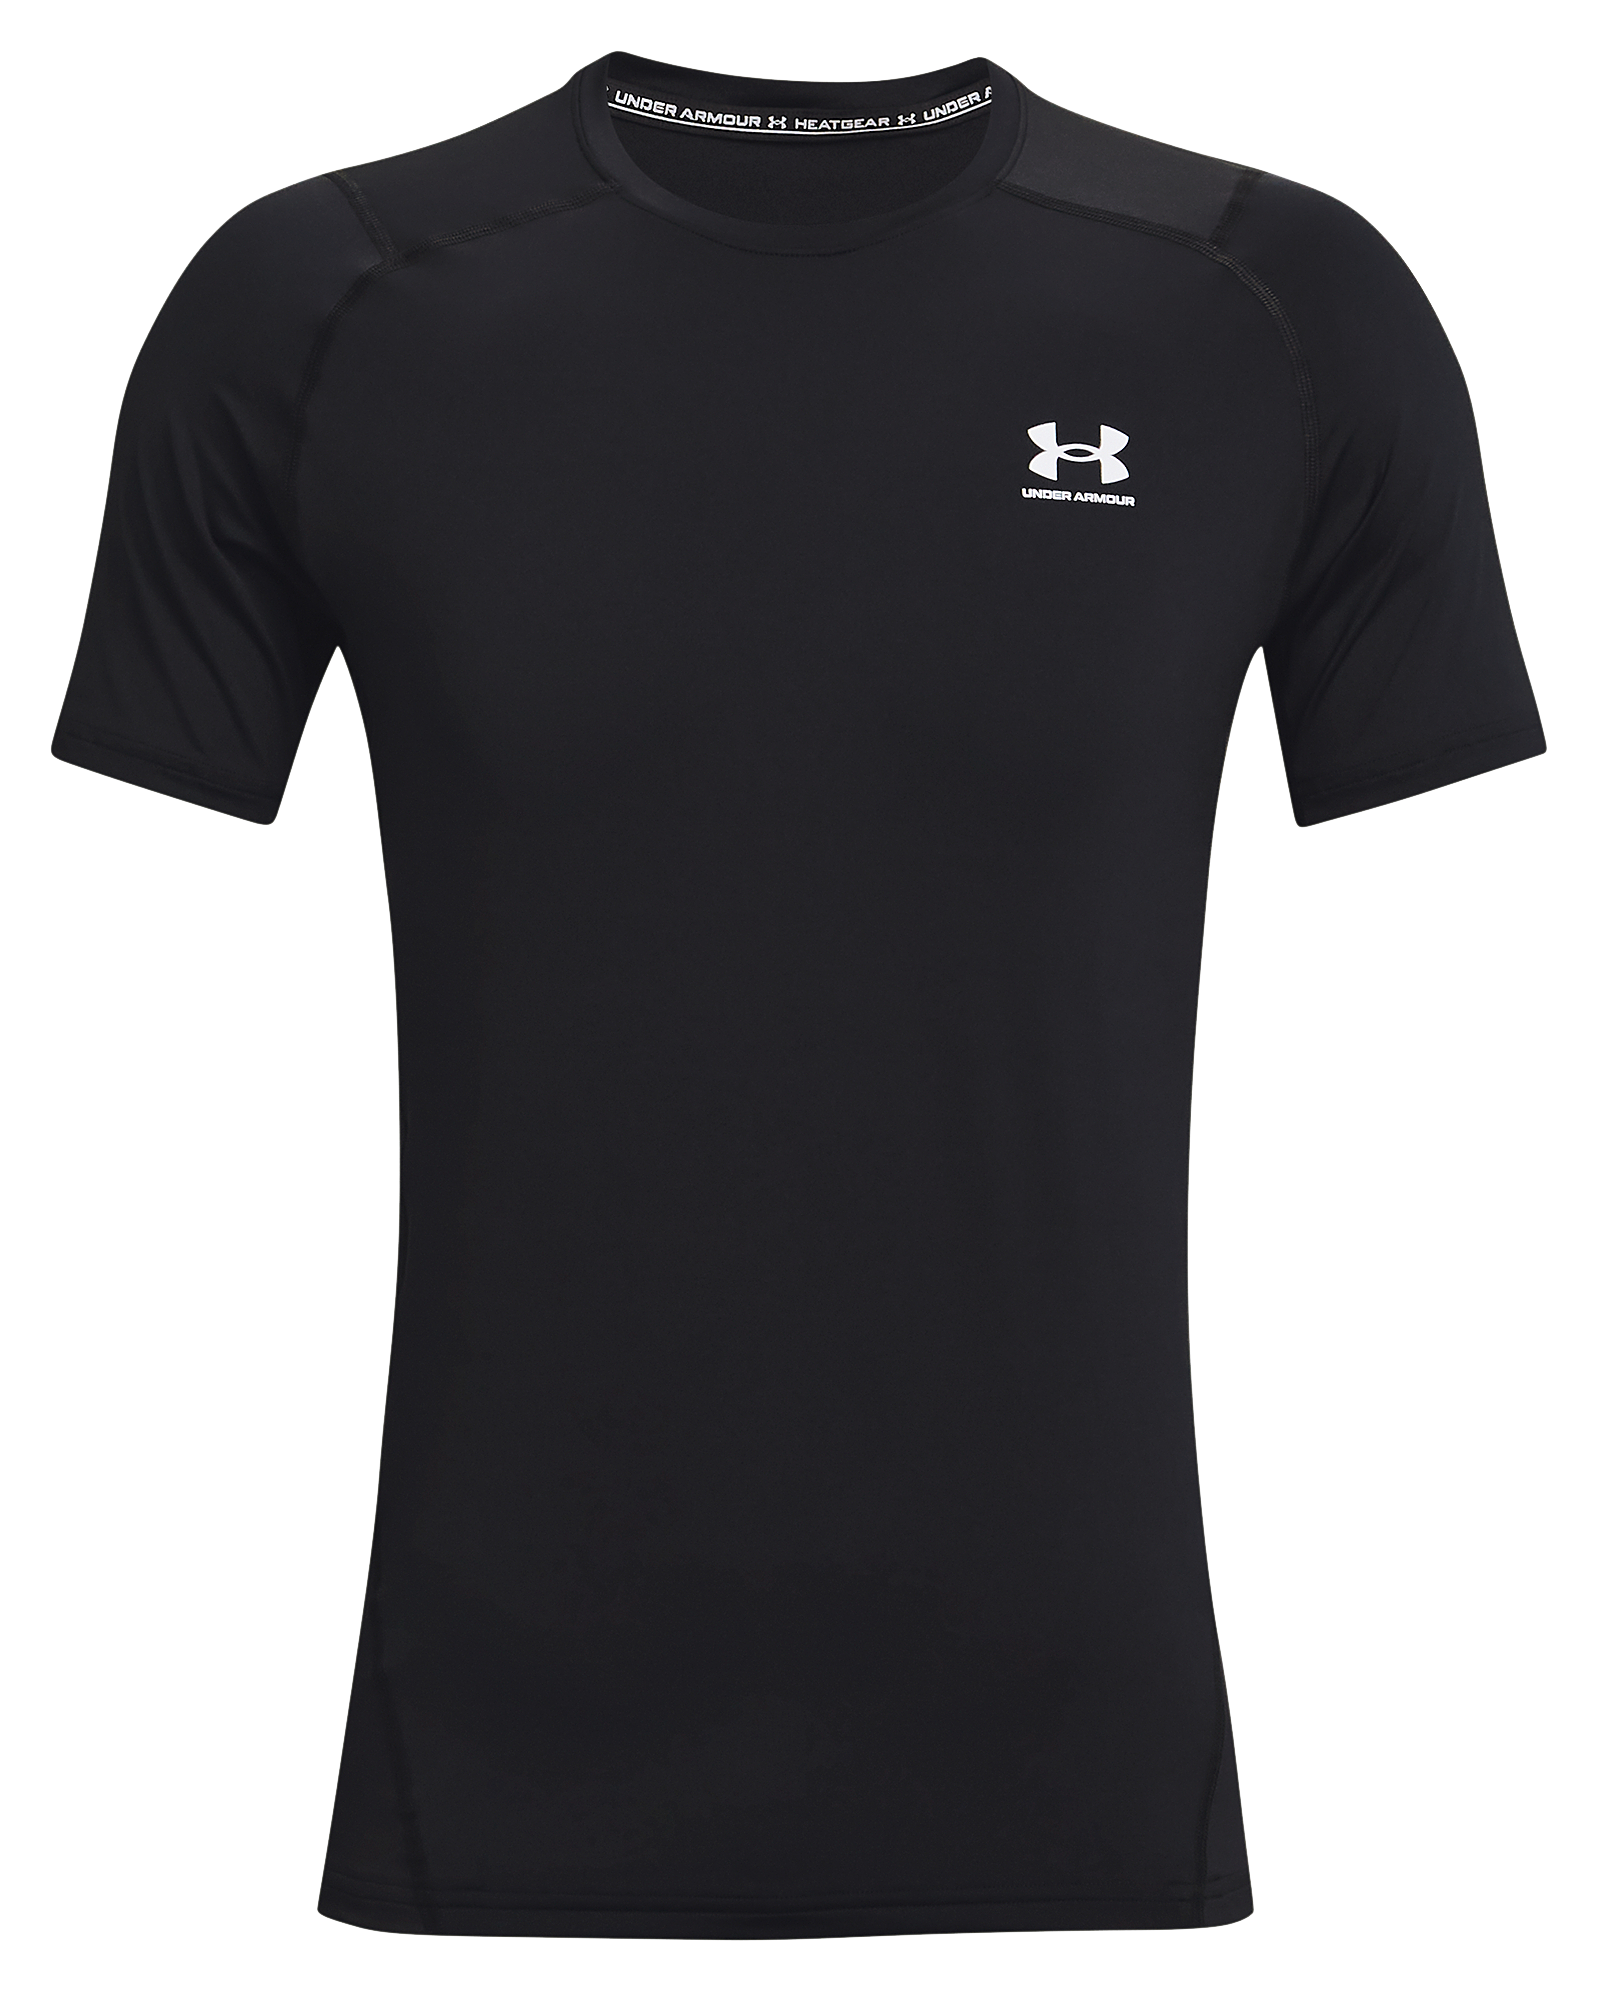 Under Armour HeatGear Fitted Short-Sleeve T-Shirt for Men - Black - 4XLT